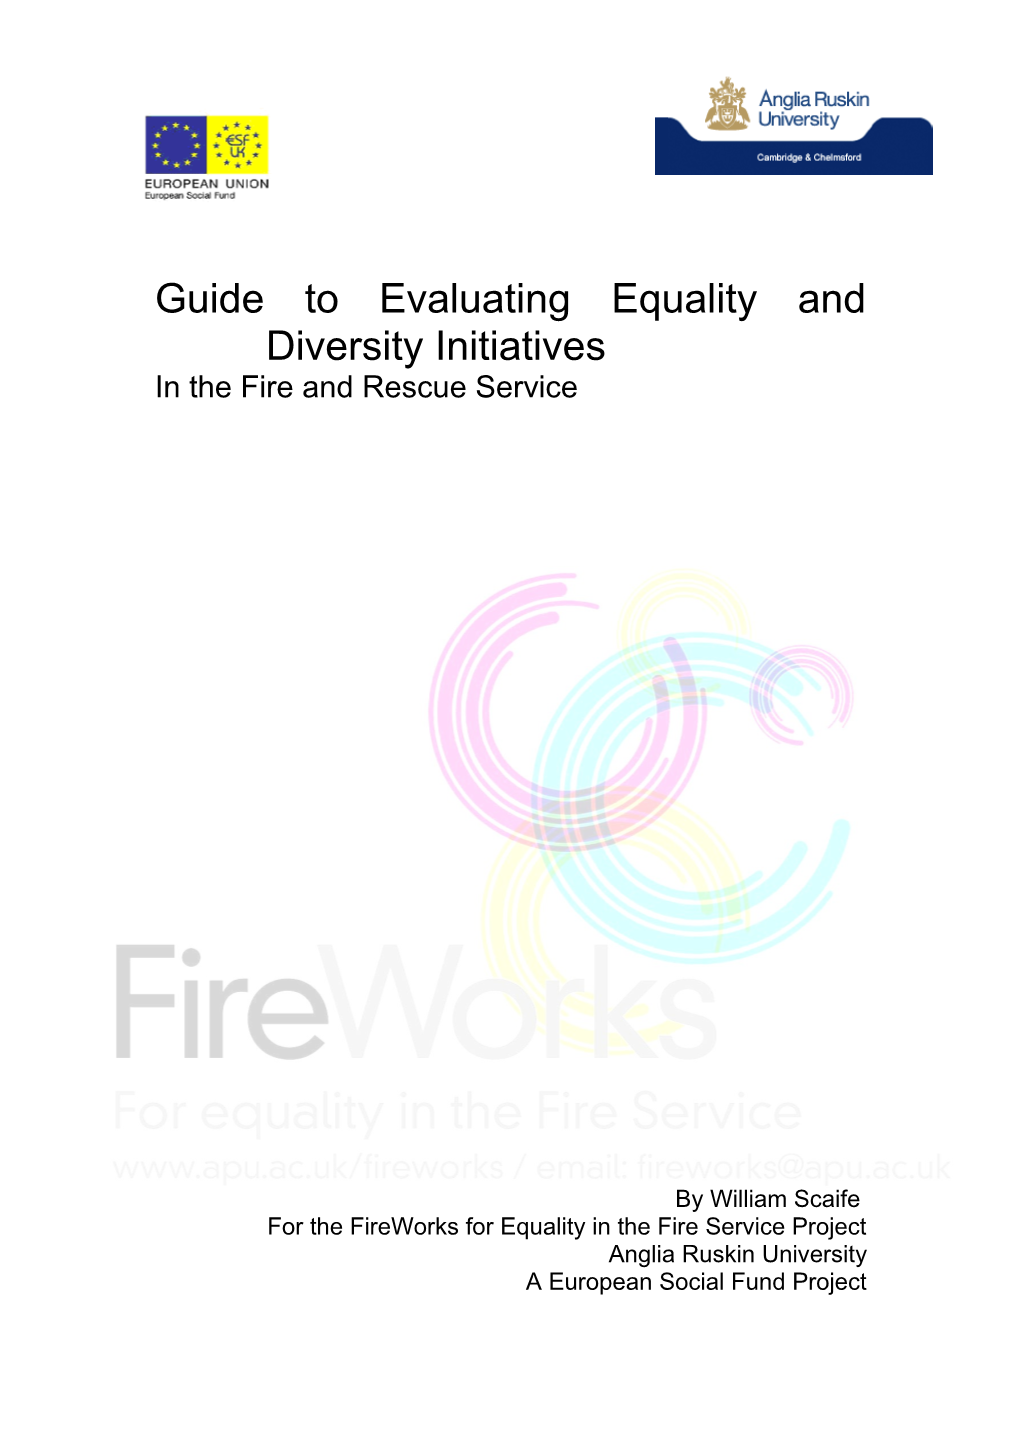 Diversity Initiative Evaluation Guide